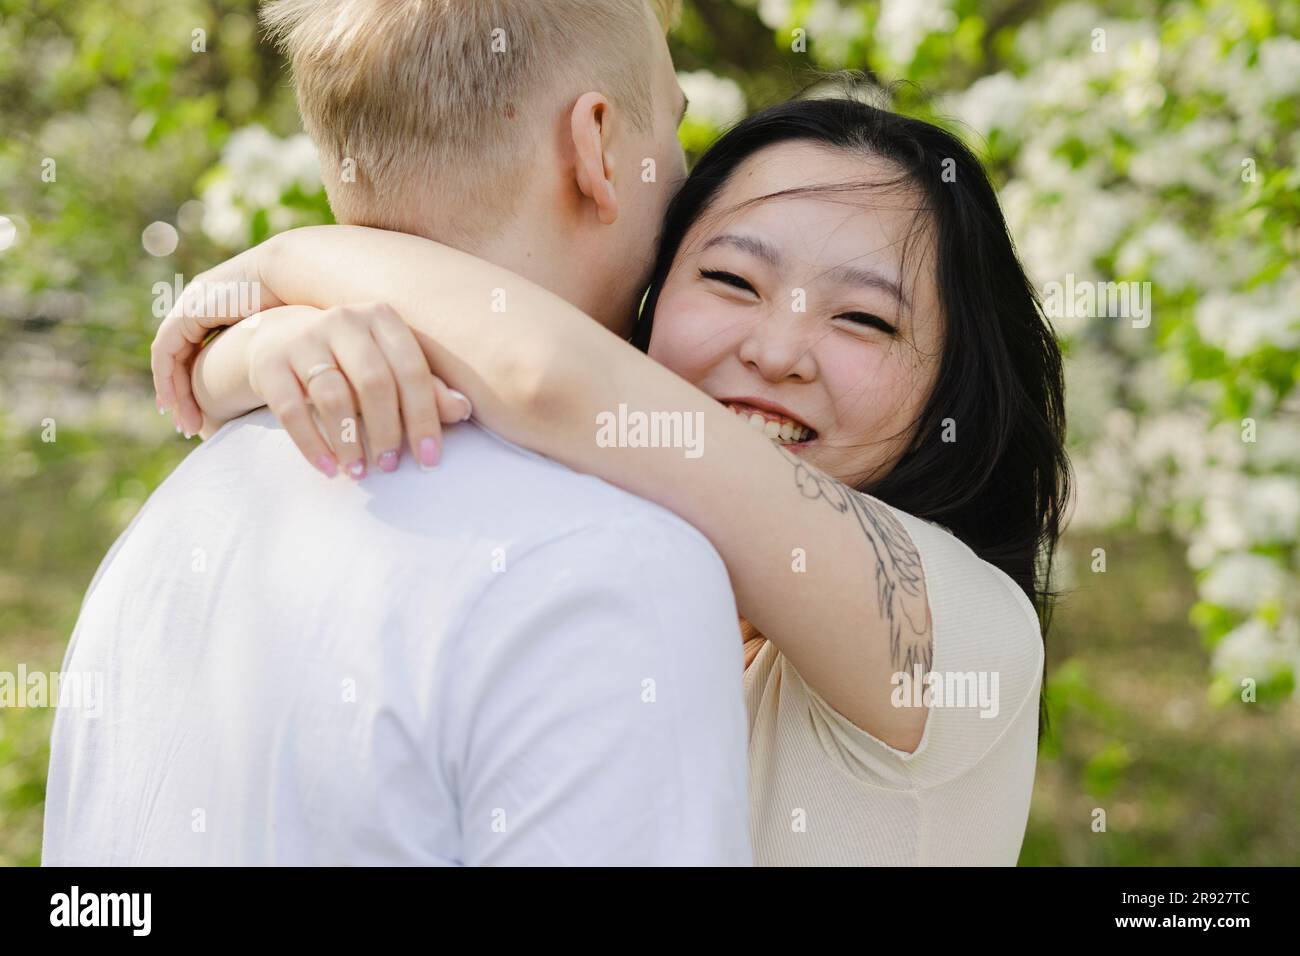 Smiling young woman embracing man at park Stock Photo